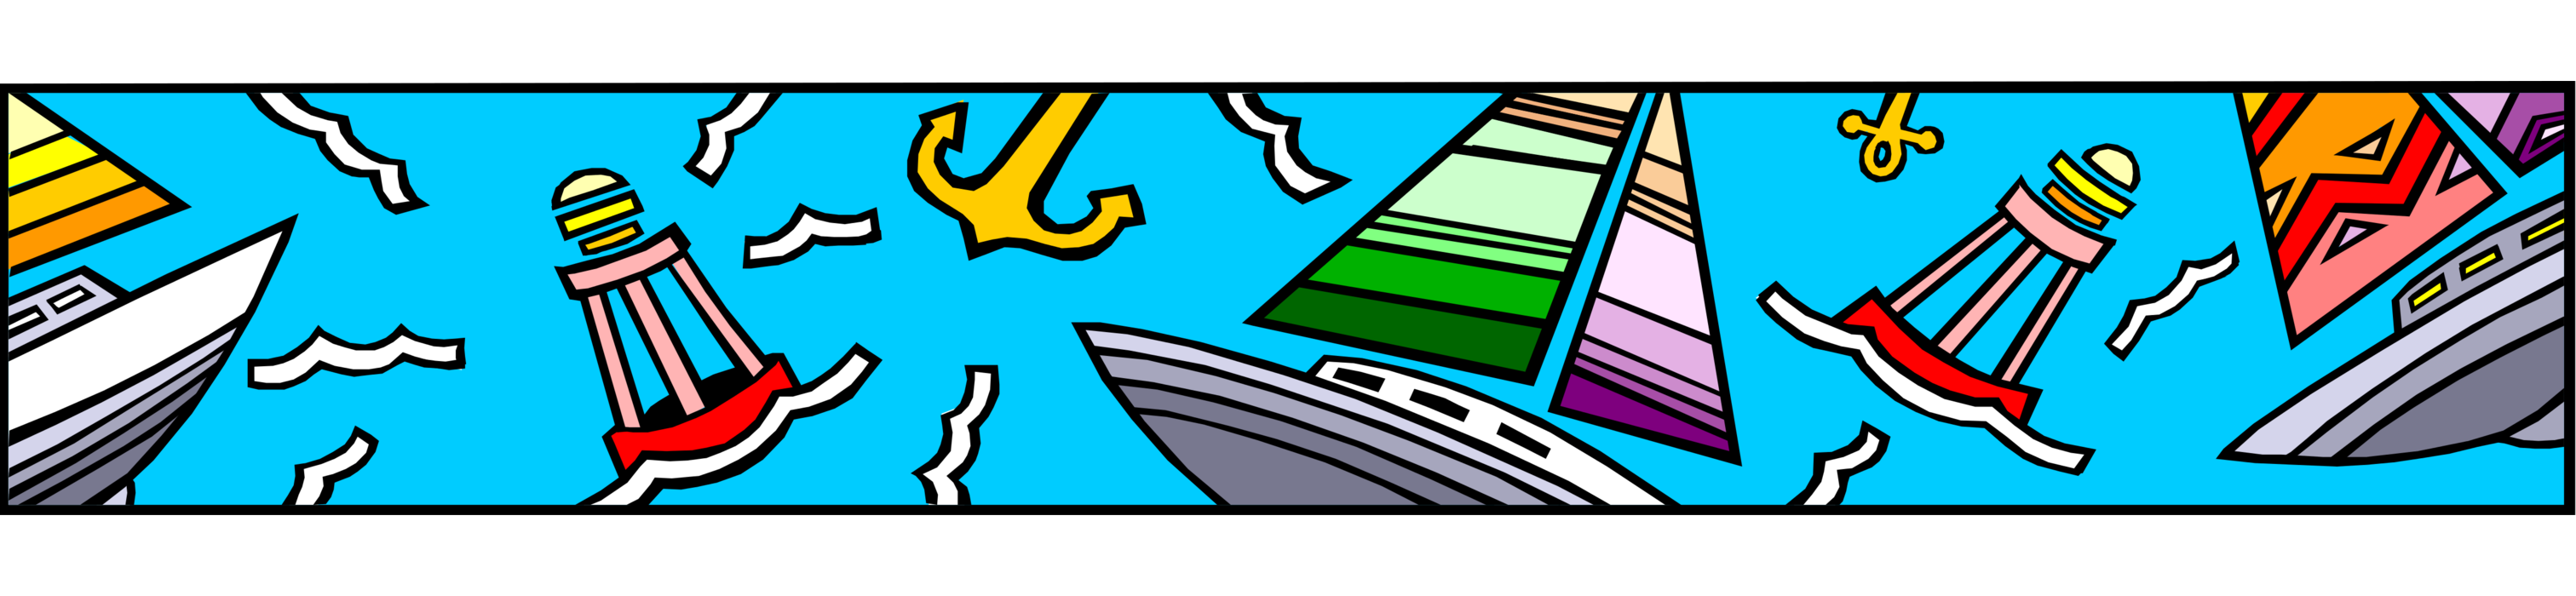 Vector Illustration of Marine Sailing Ships and Buoys Banner